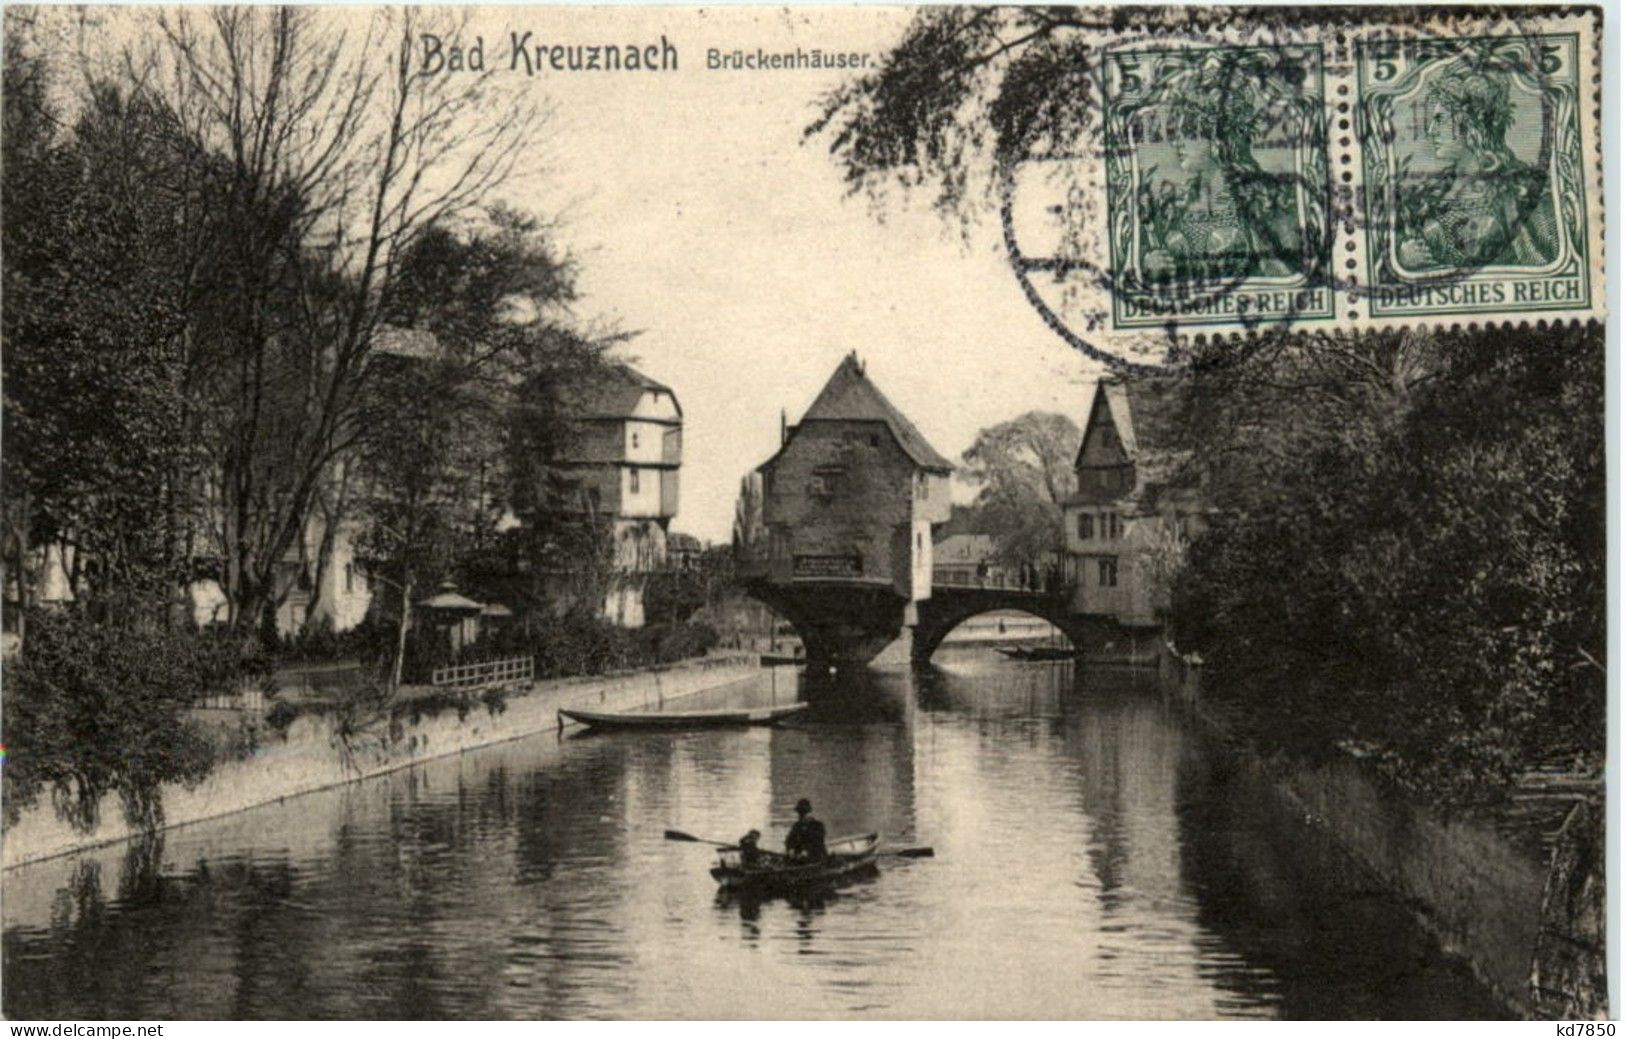 Bad Kreuznach - Bad Kreuznach